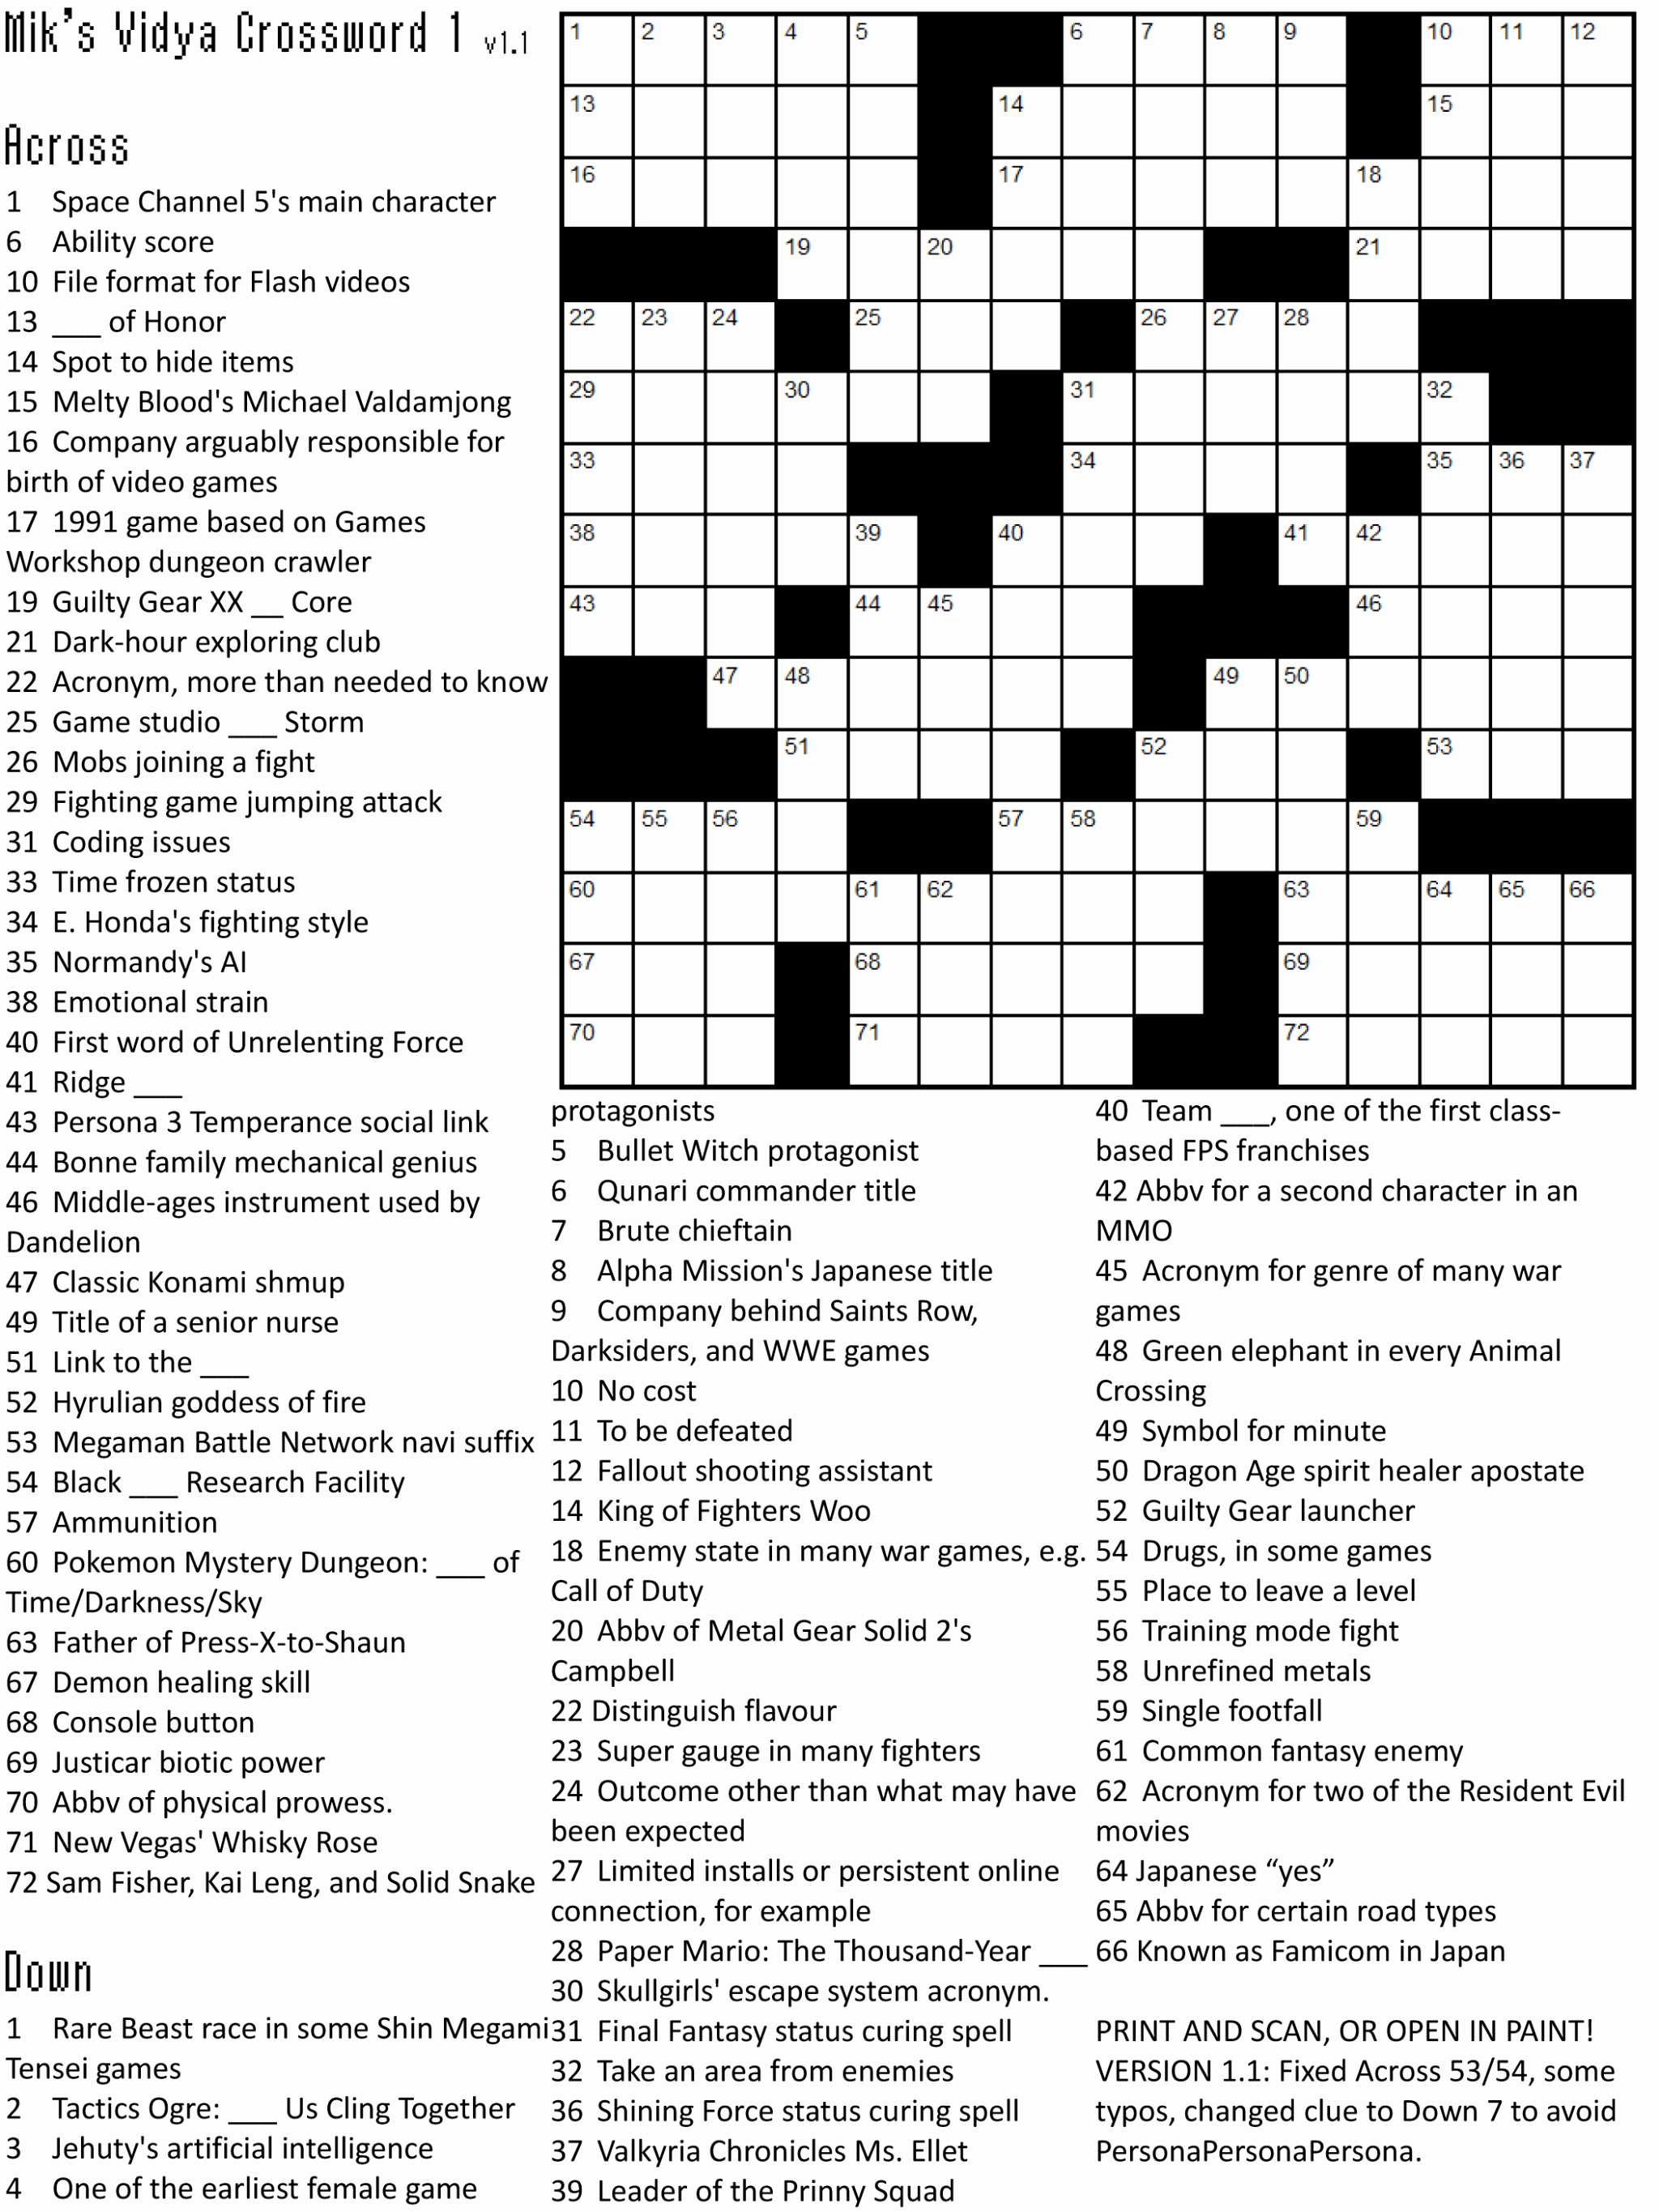 Free Printable Crossword Puzzles For Seniors Online